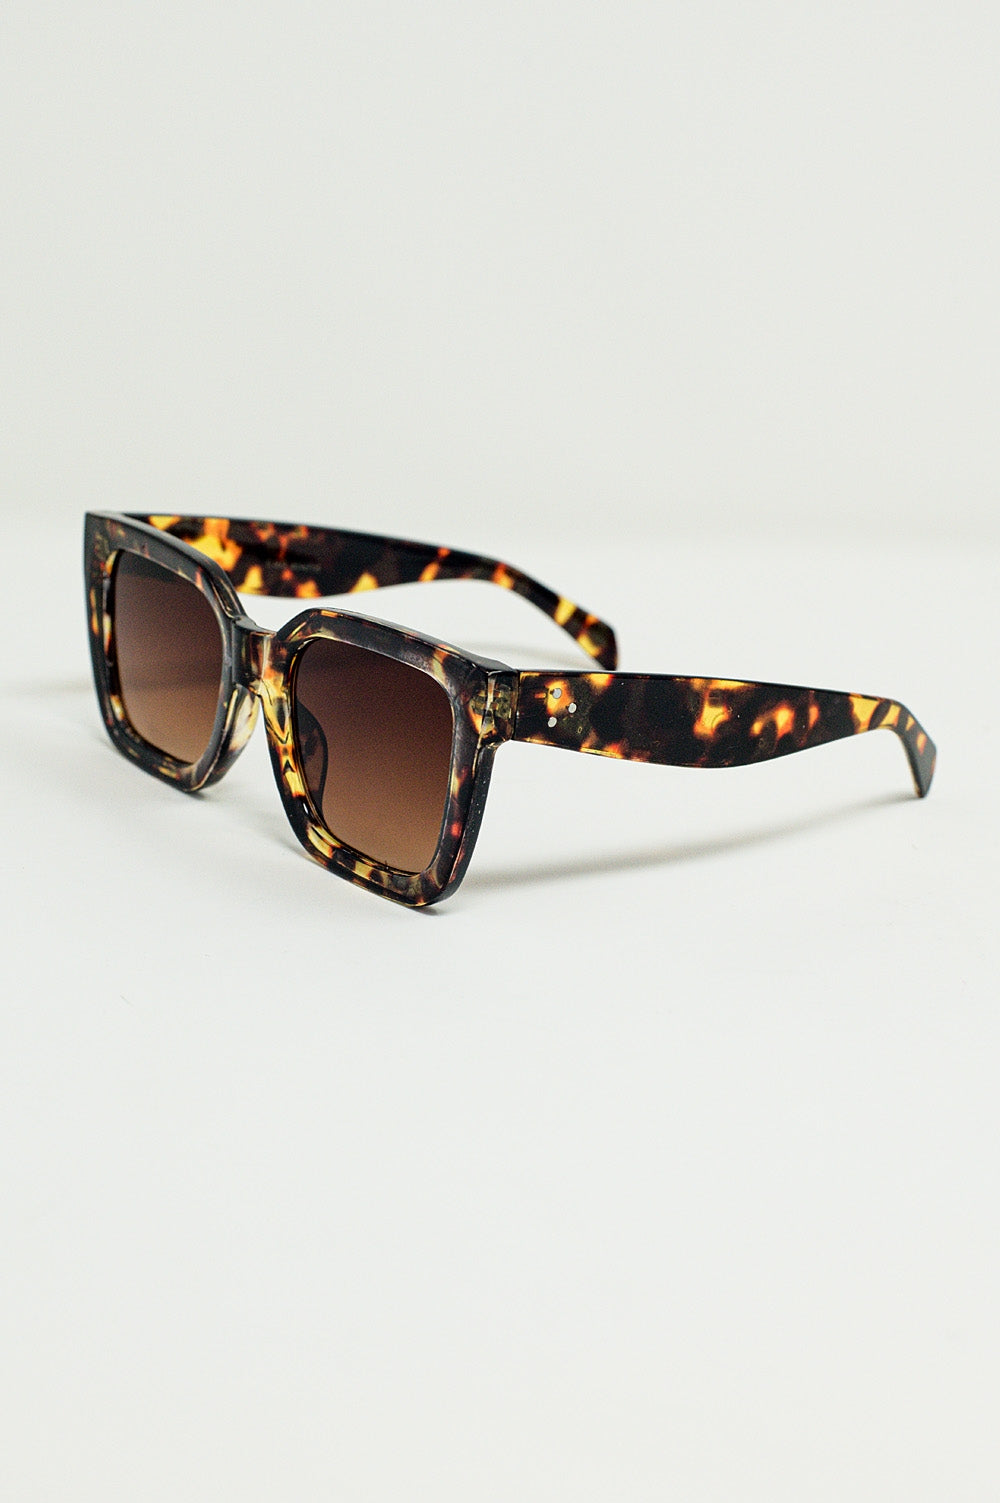 Elongated Squared Sunglasses With Dark Lenses in Tortoise Shell